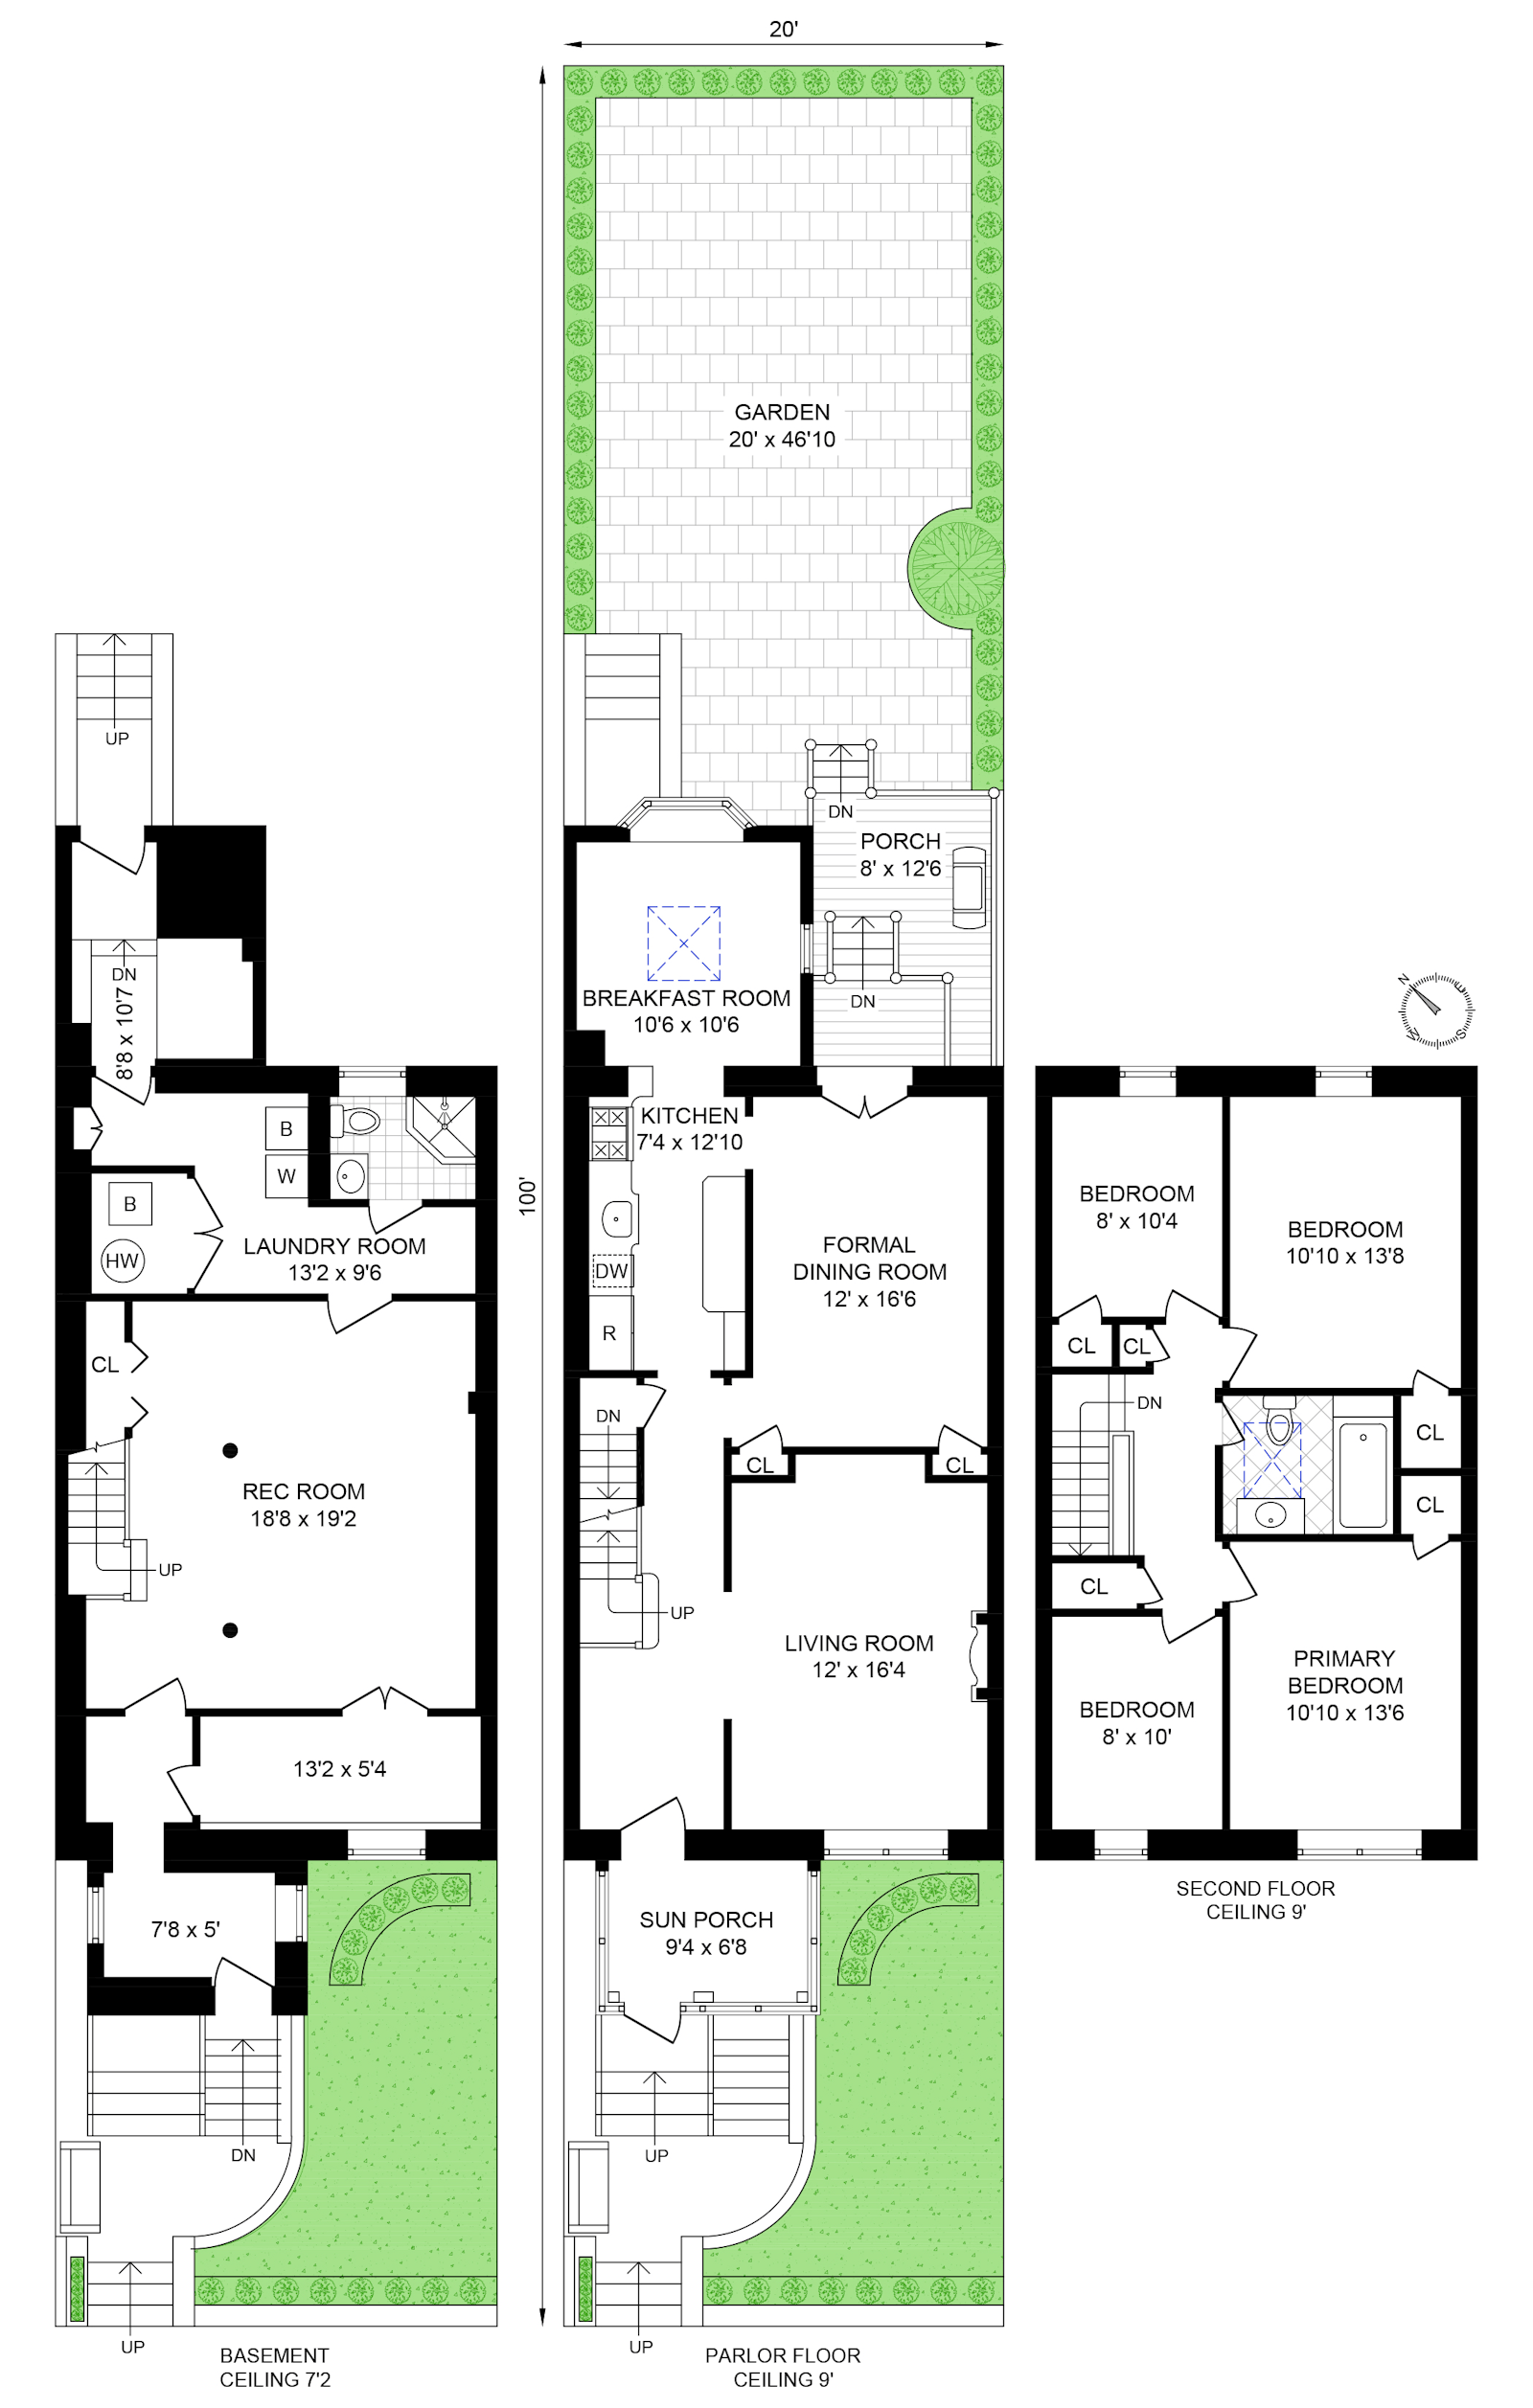 Floorplan for 559 78th Street